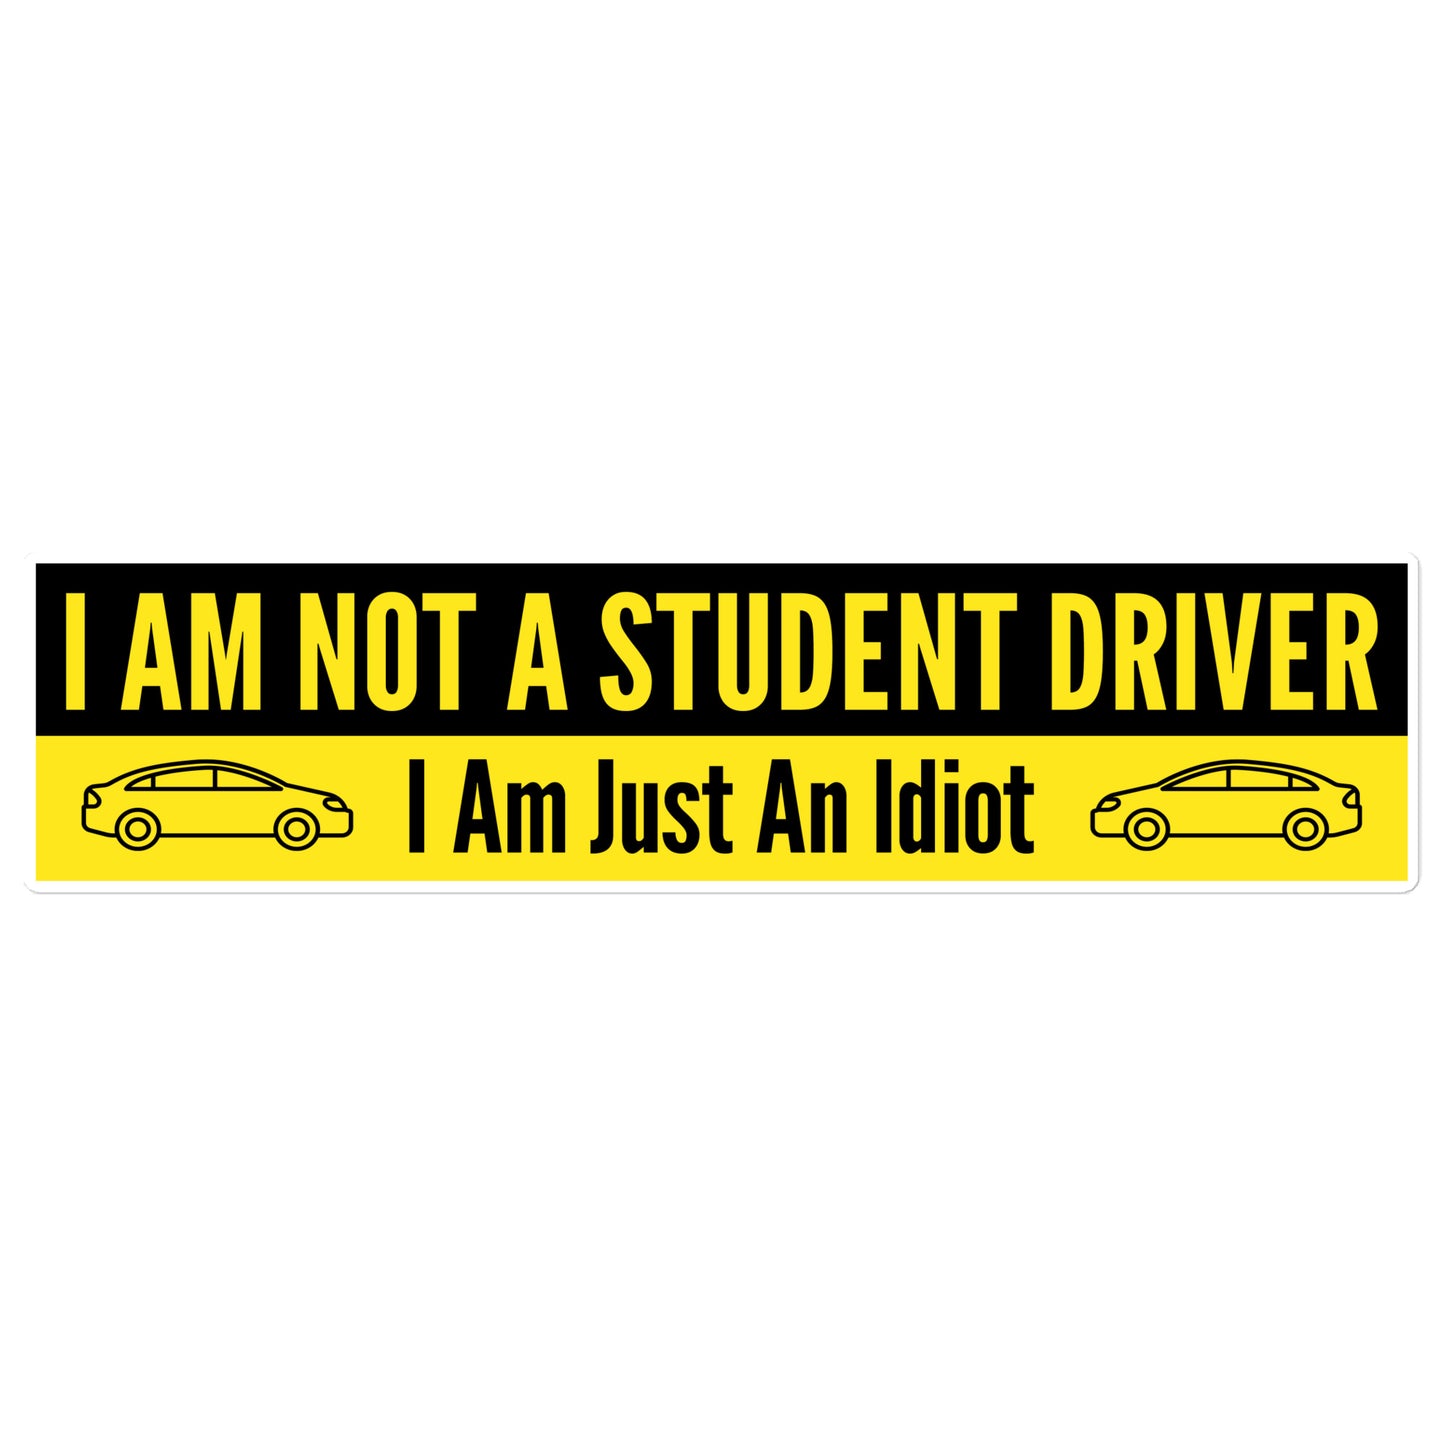 I Am Not a Student Driver bumper sticker